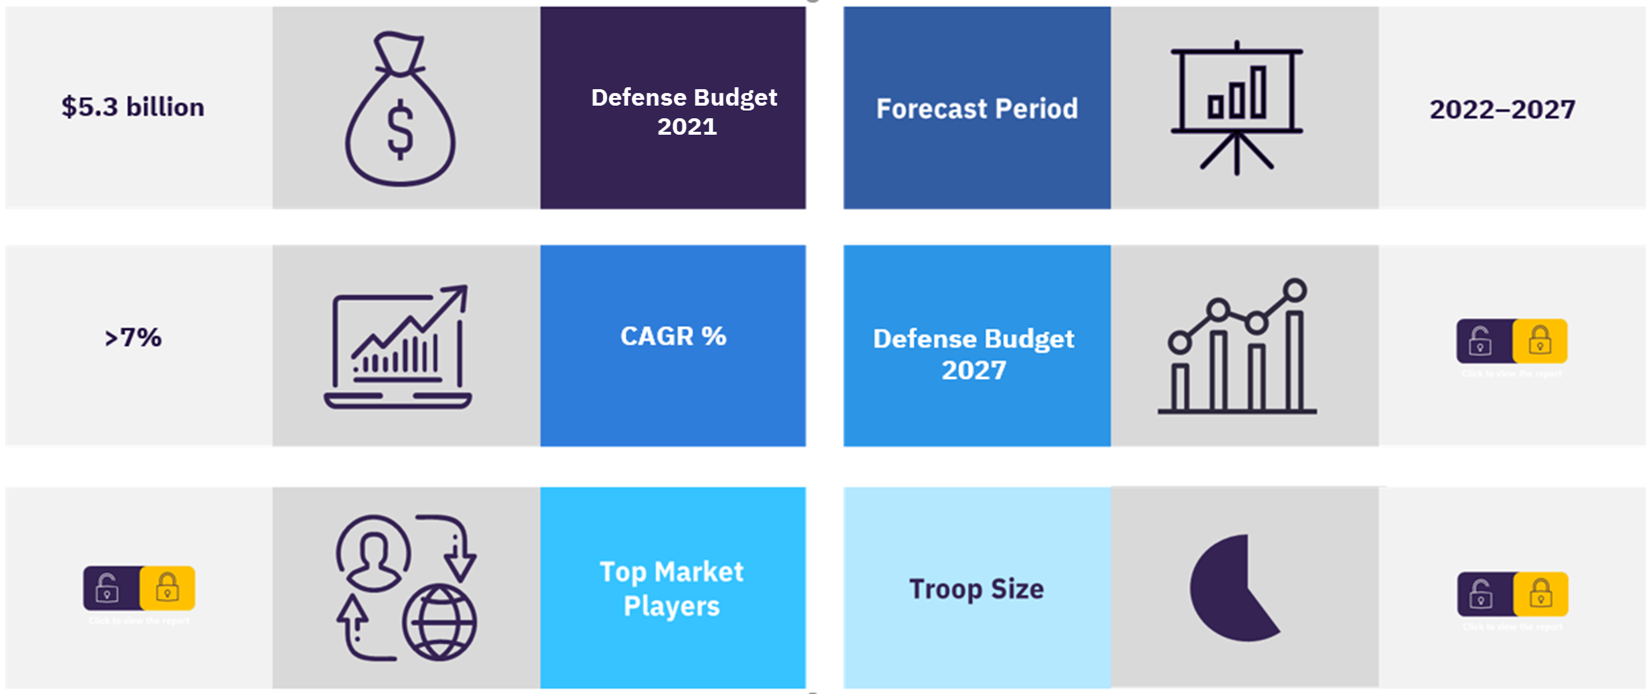 Overview of the defense market in Vietnam